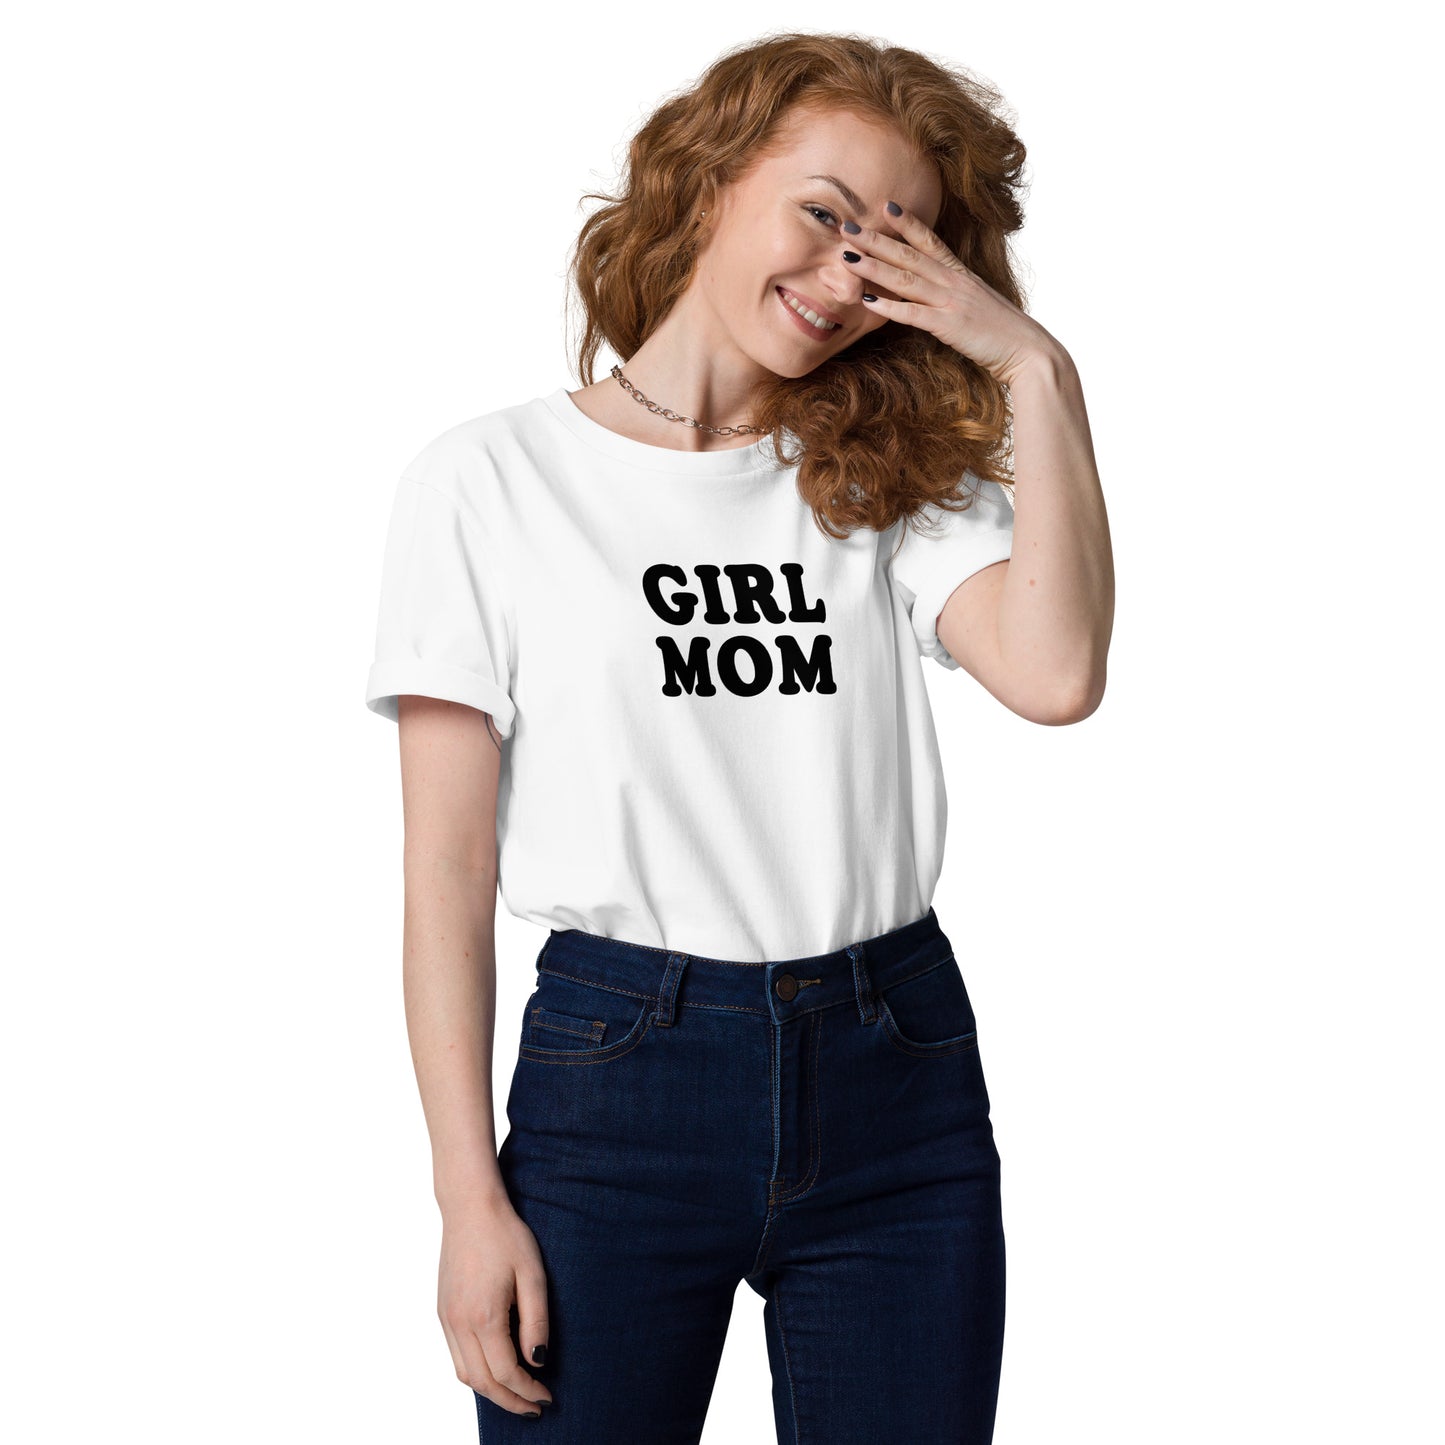 "Girl Mom" Unisex organic cotton t-shirt